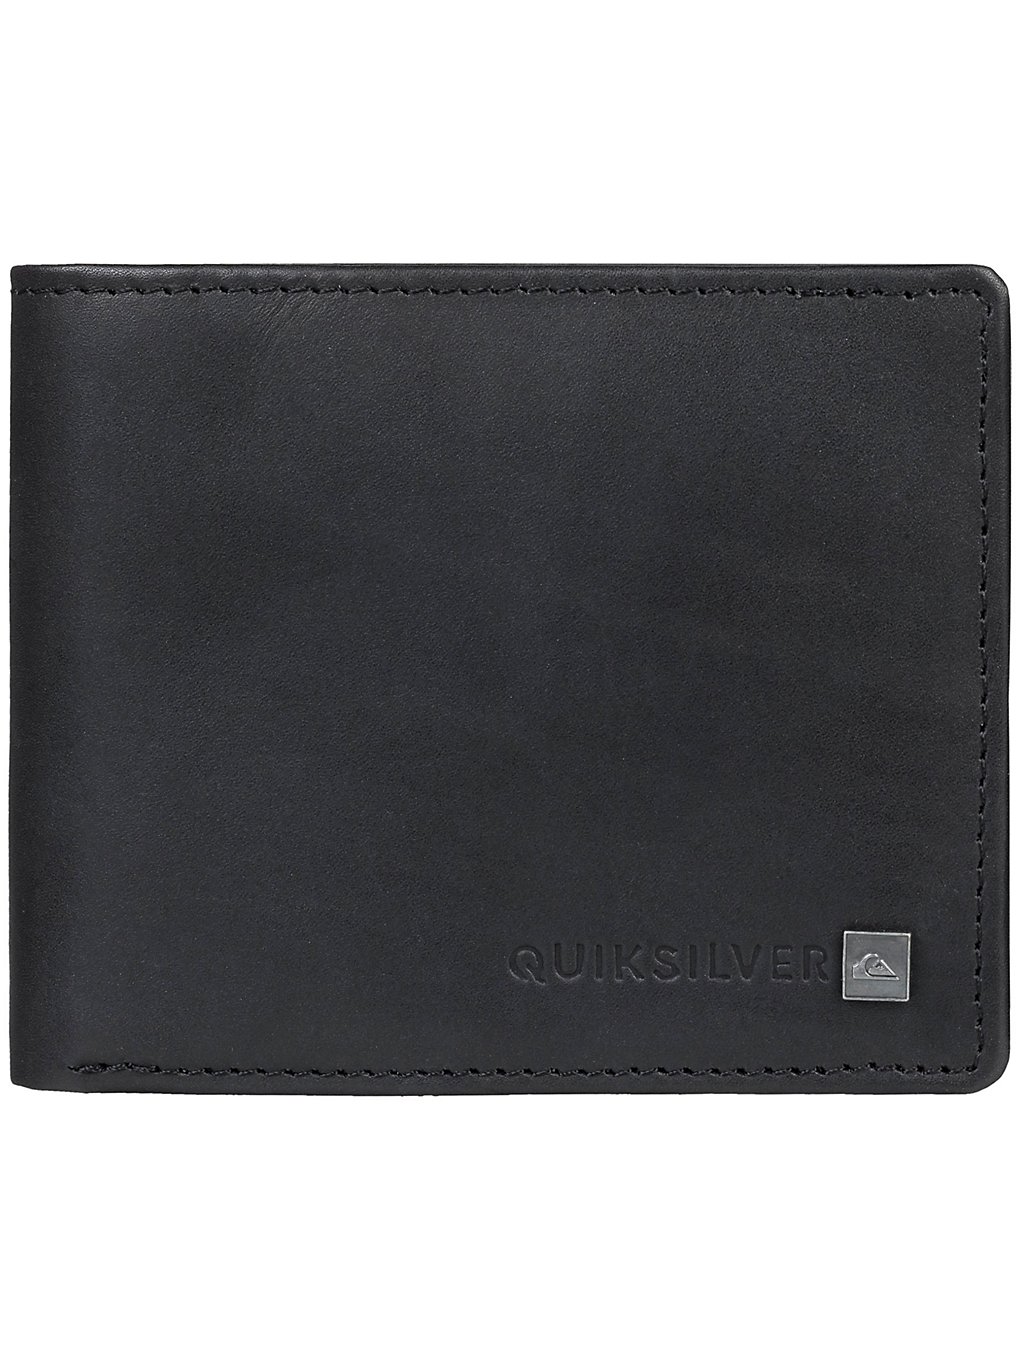 Quiksilver curvecutter wallet musta, quiksilver